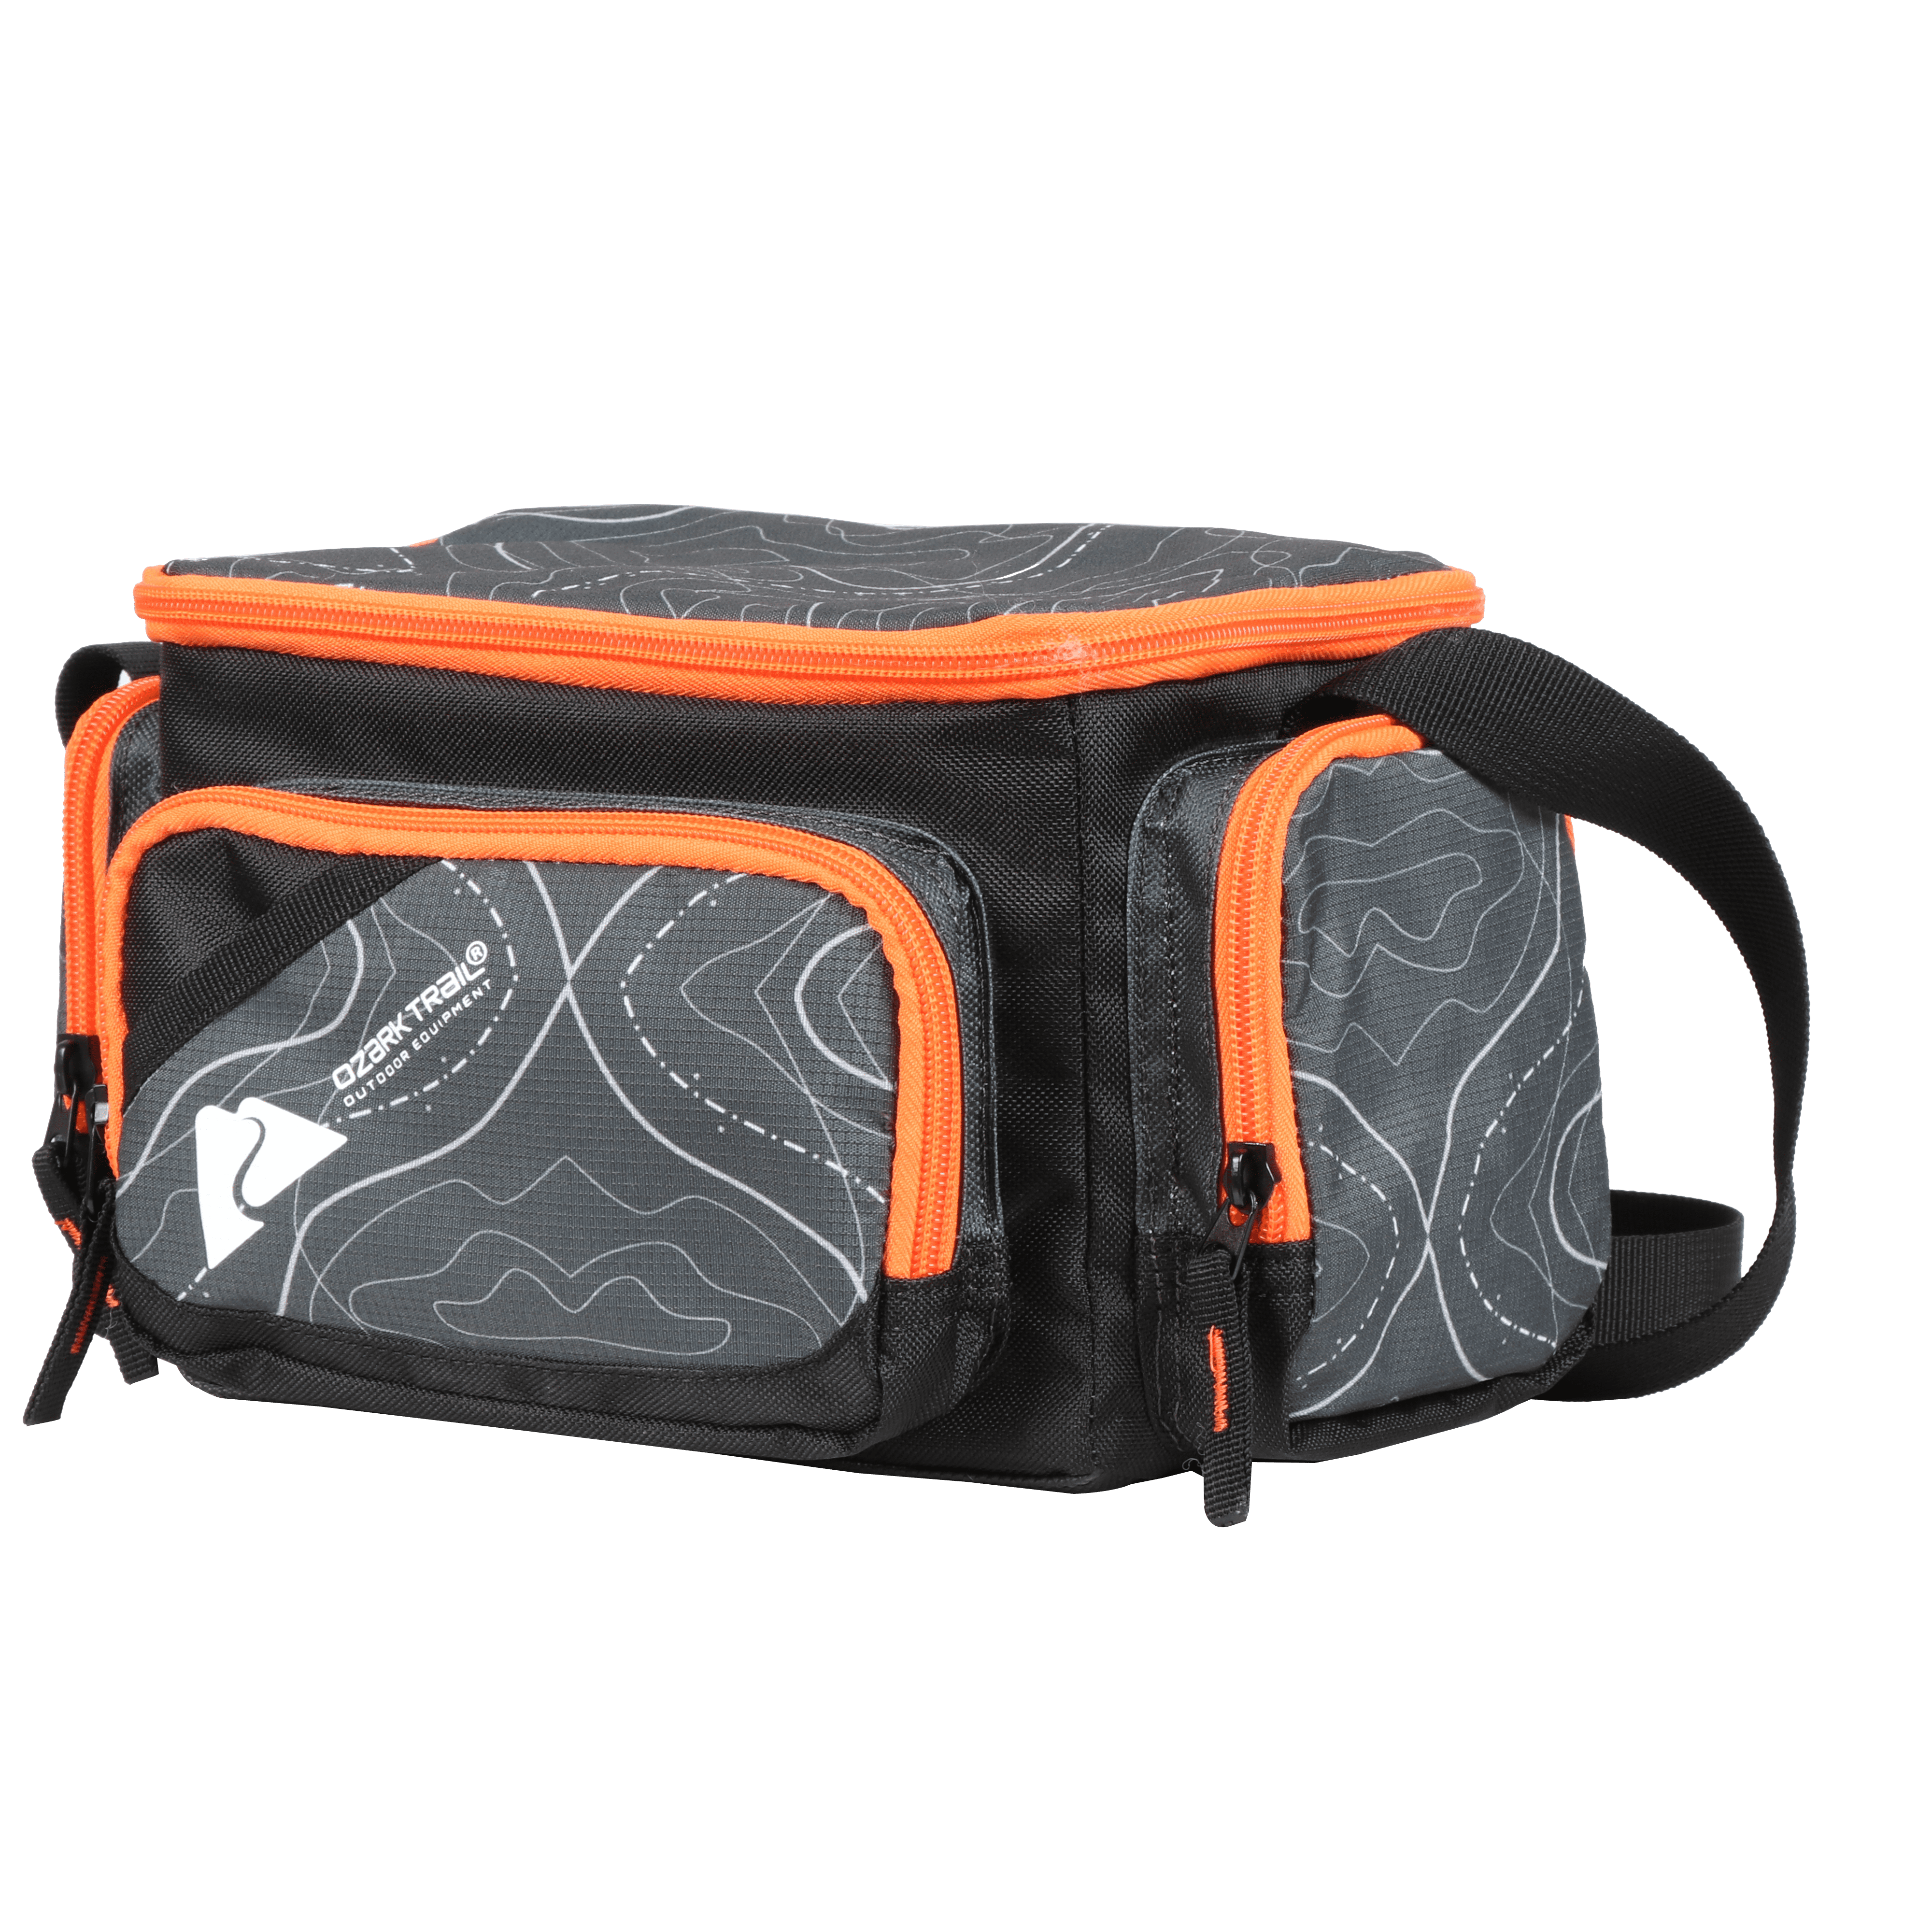 Orange/Black 11" x 3" x 7 Ozark Trail Tackle Bag with Organizer Totes 